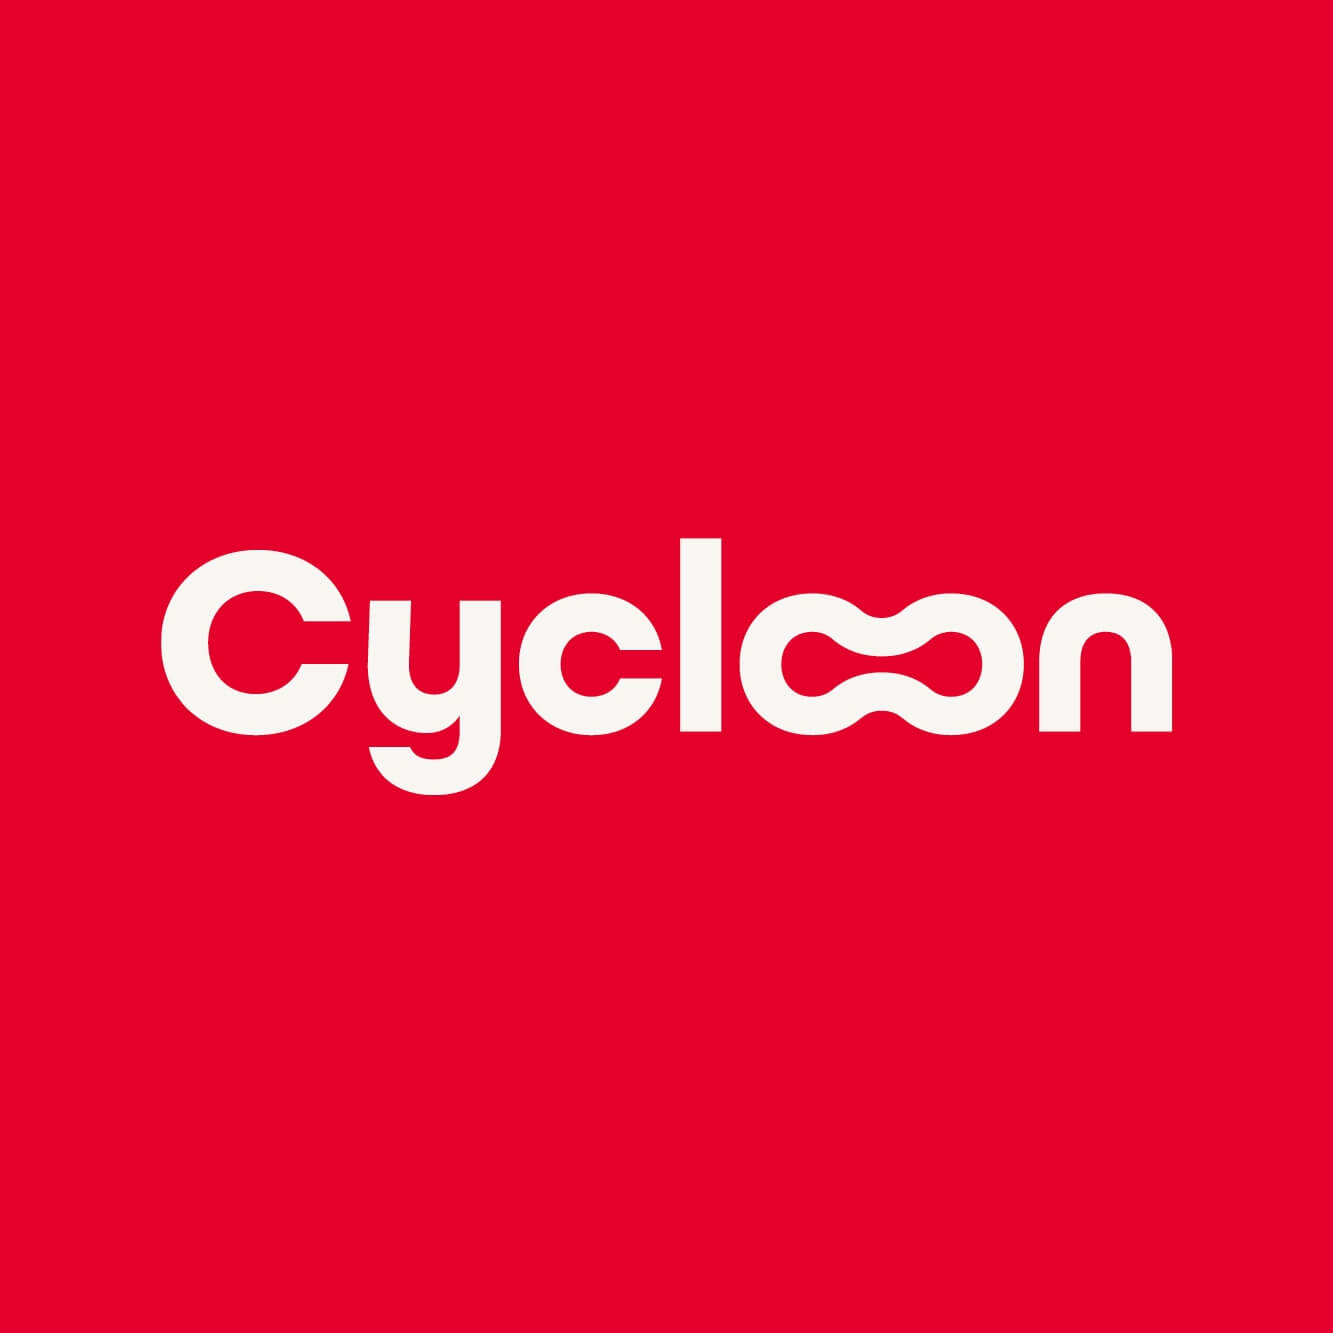 cycloon logo